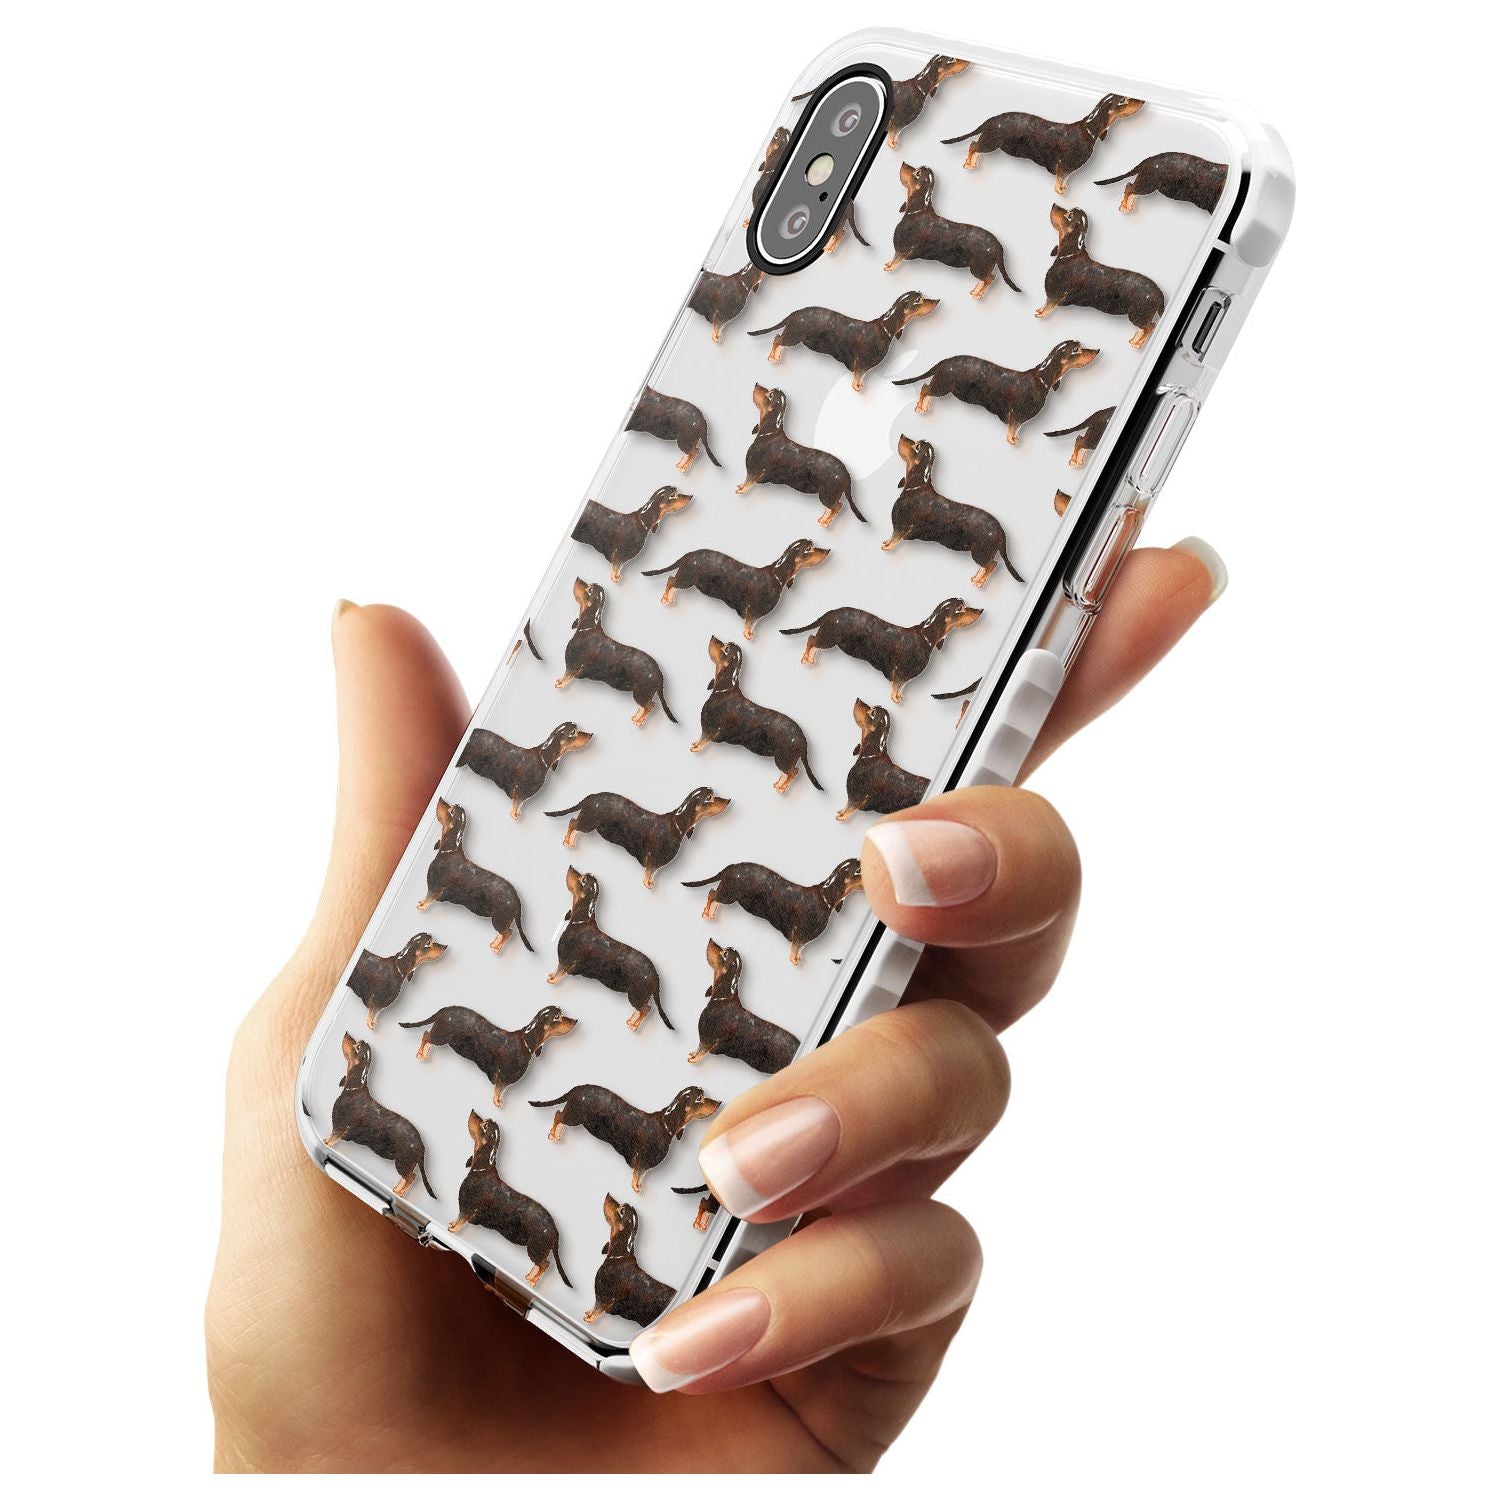 Dachshund (Black & Tan) Watercolour Dog Pattern Impact Phone Case for iPhone X XS Max XR